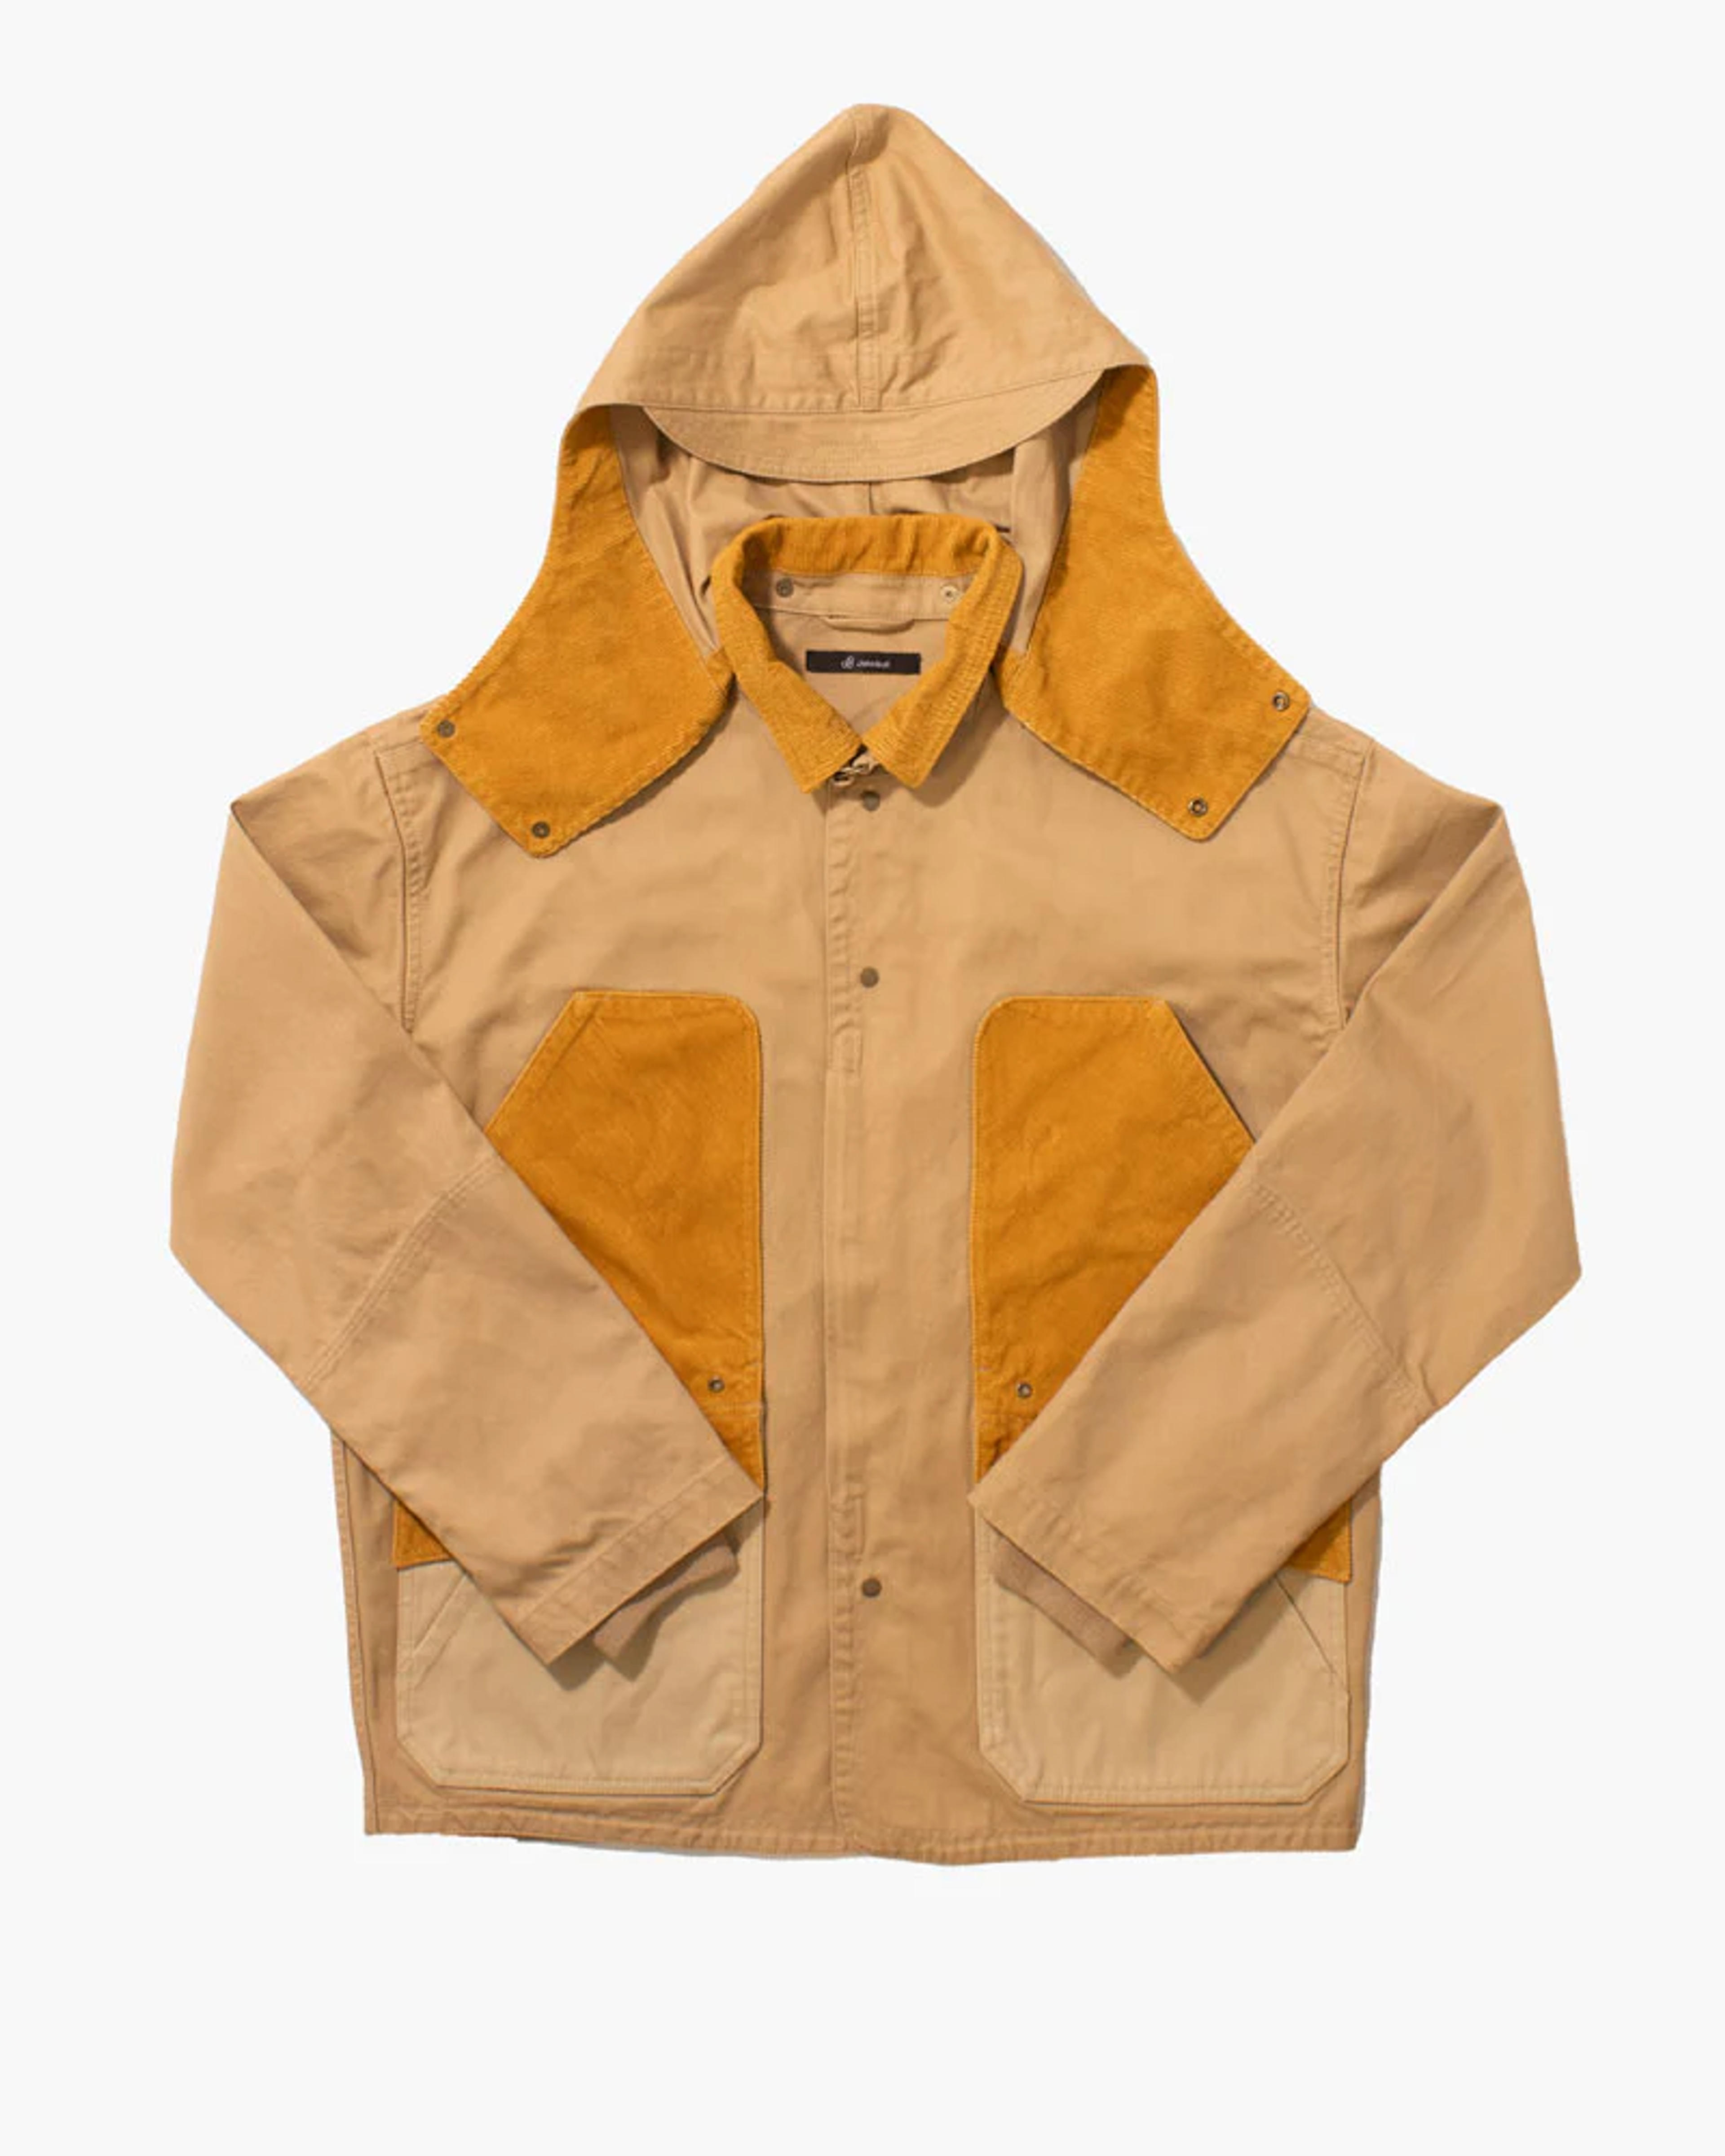 Japanese Repro Hunting Jacket with Removable Hood, Johnbull Brand, Bro – Kiriko Made